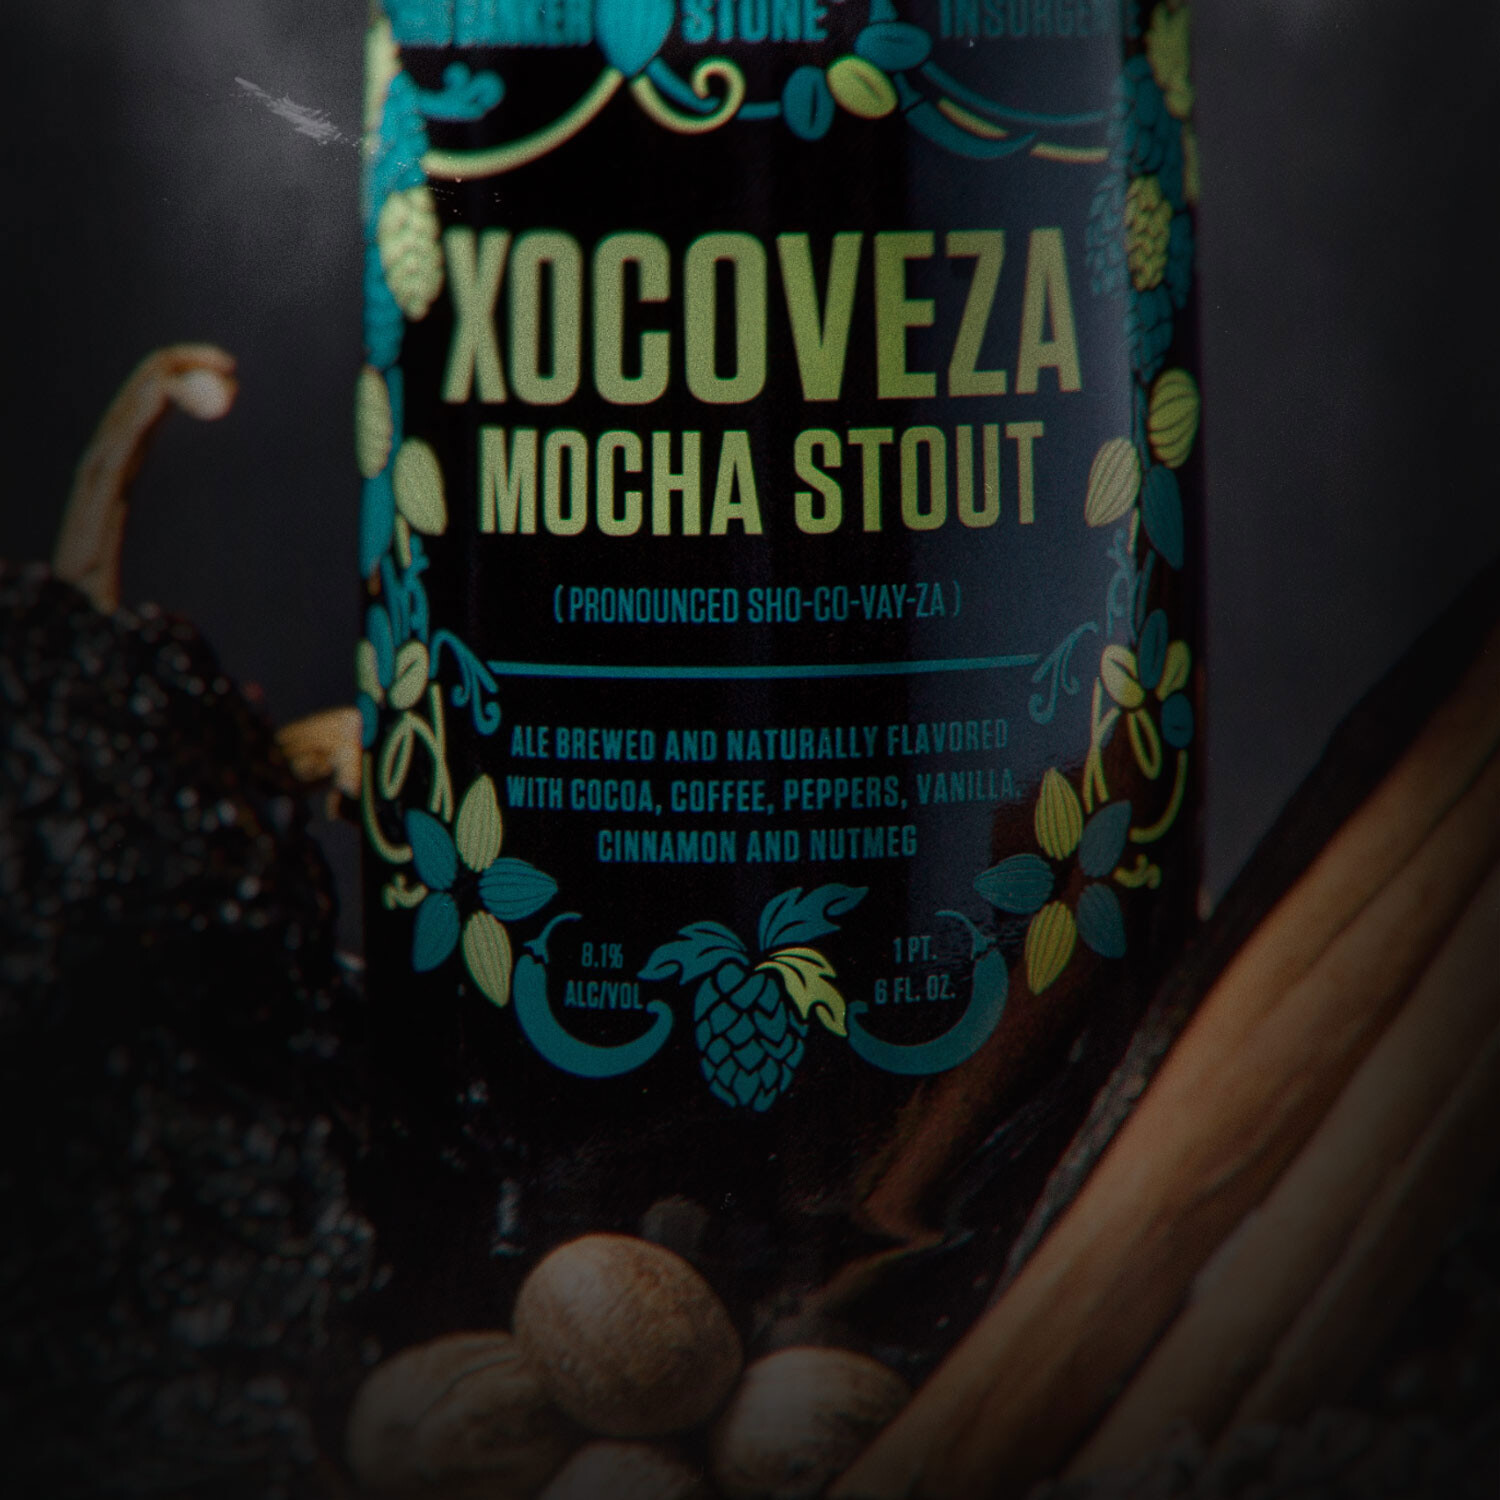 Chris Banker / Stone / Insurgente Xocoveza Mocha Stout bottle and ingredients